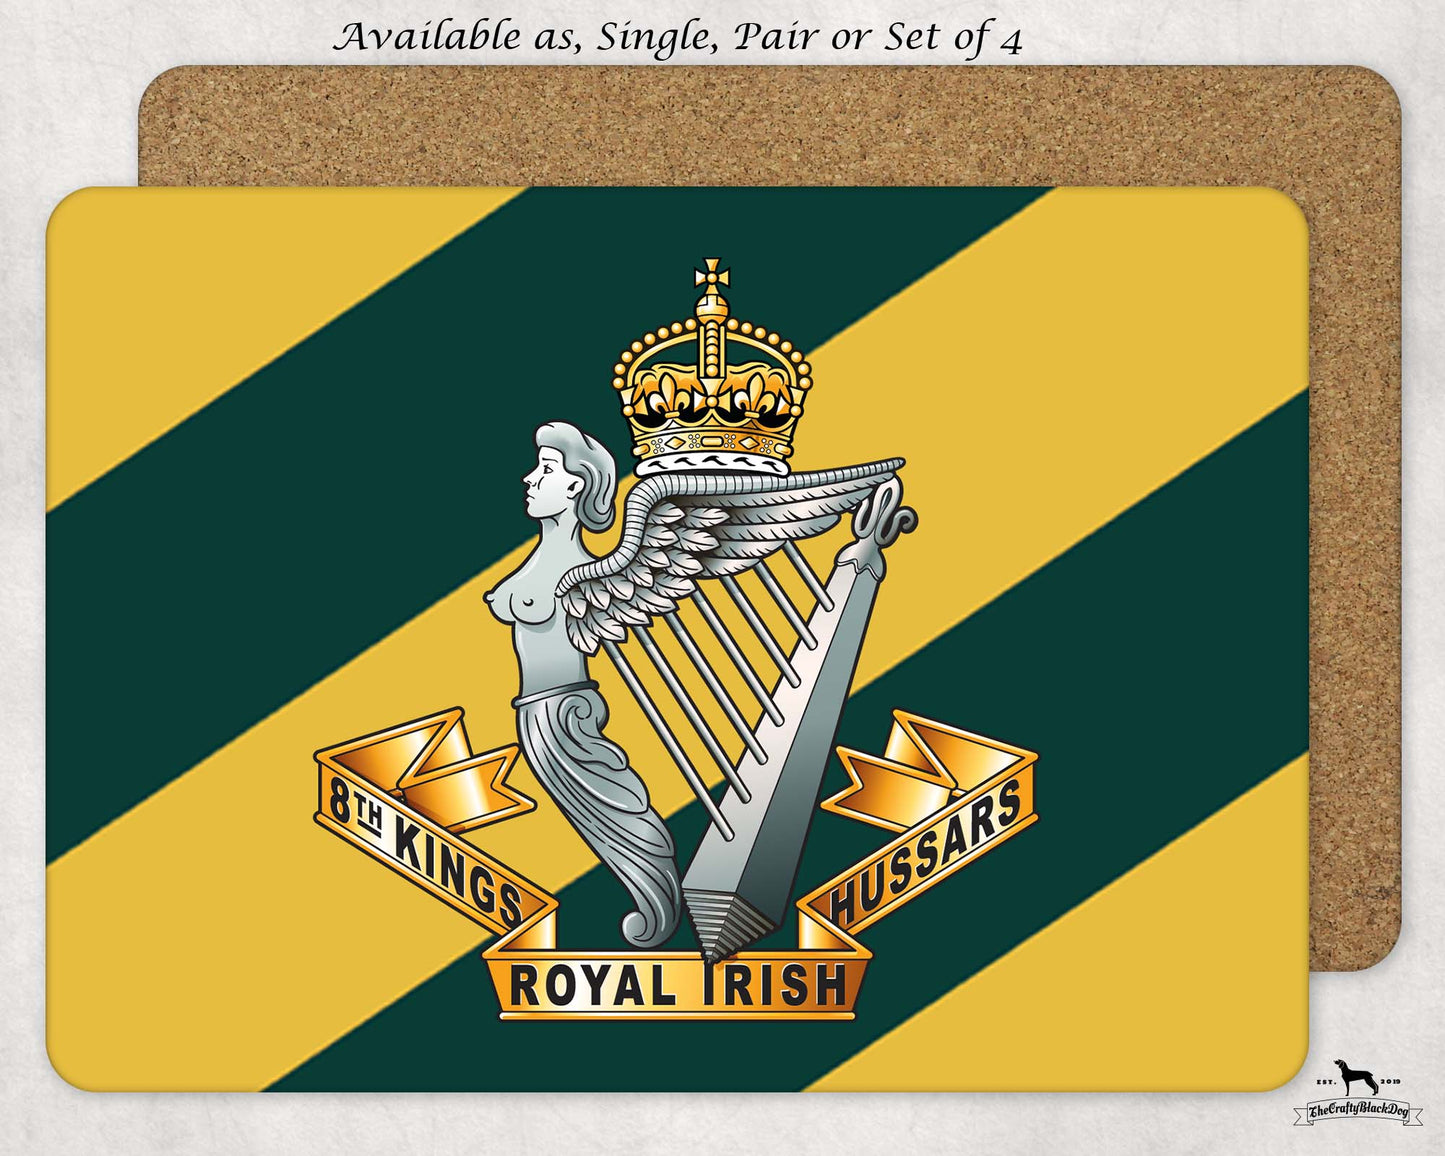 8th Kings Royal Irish Hussars - Placemat(s)